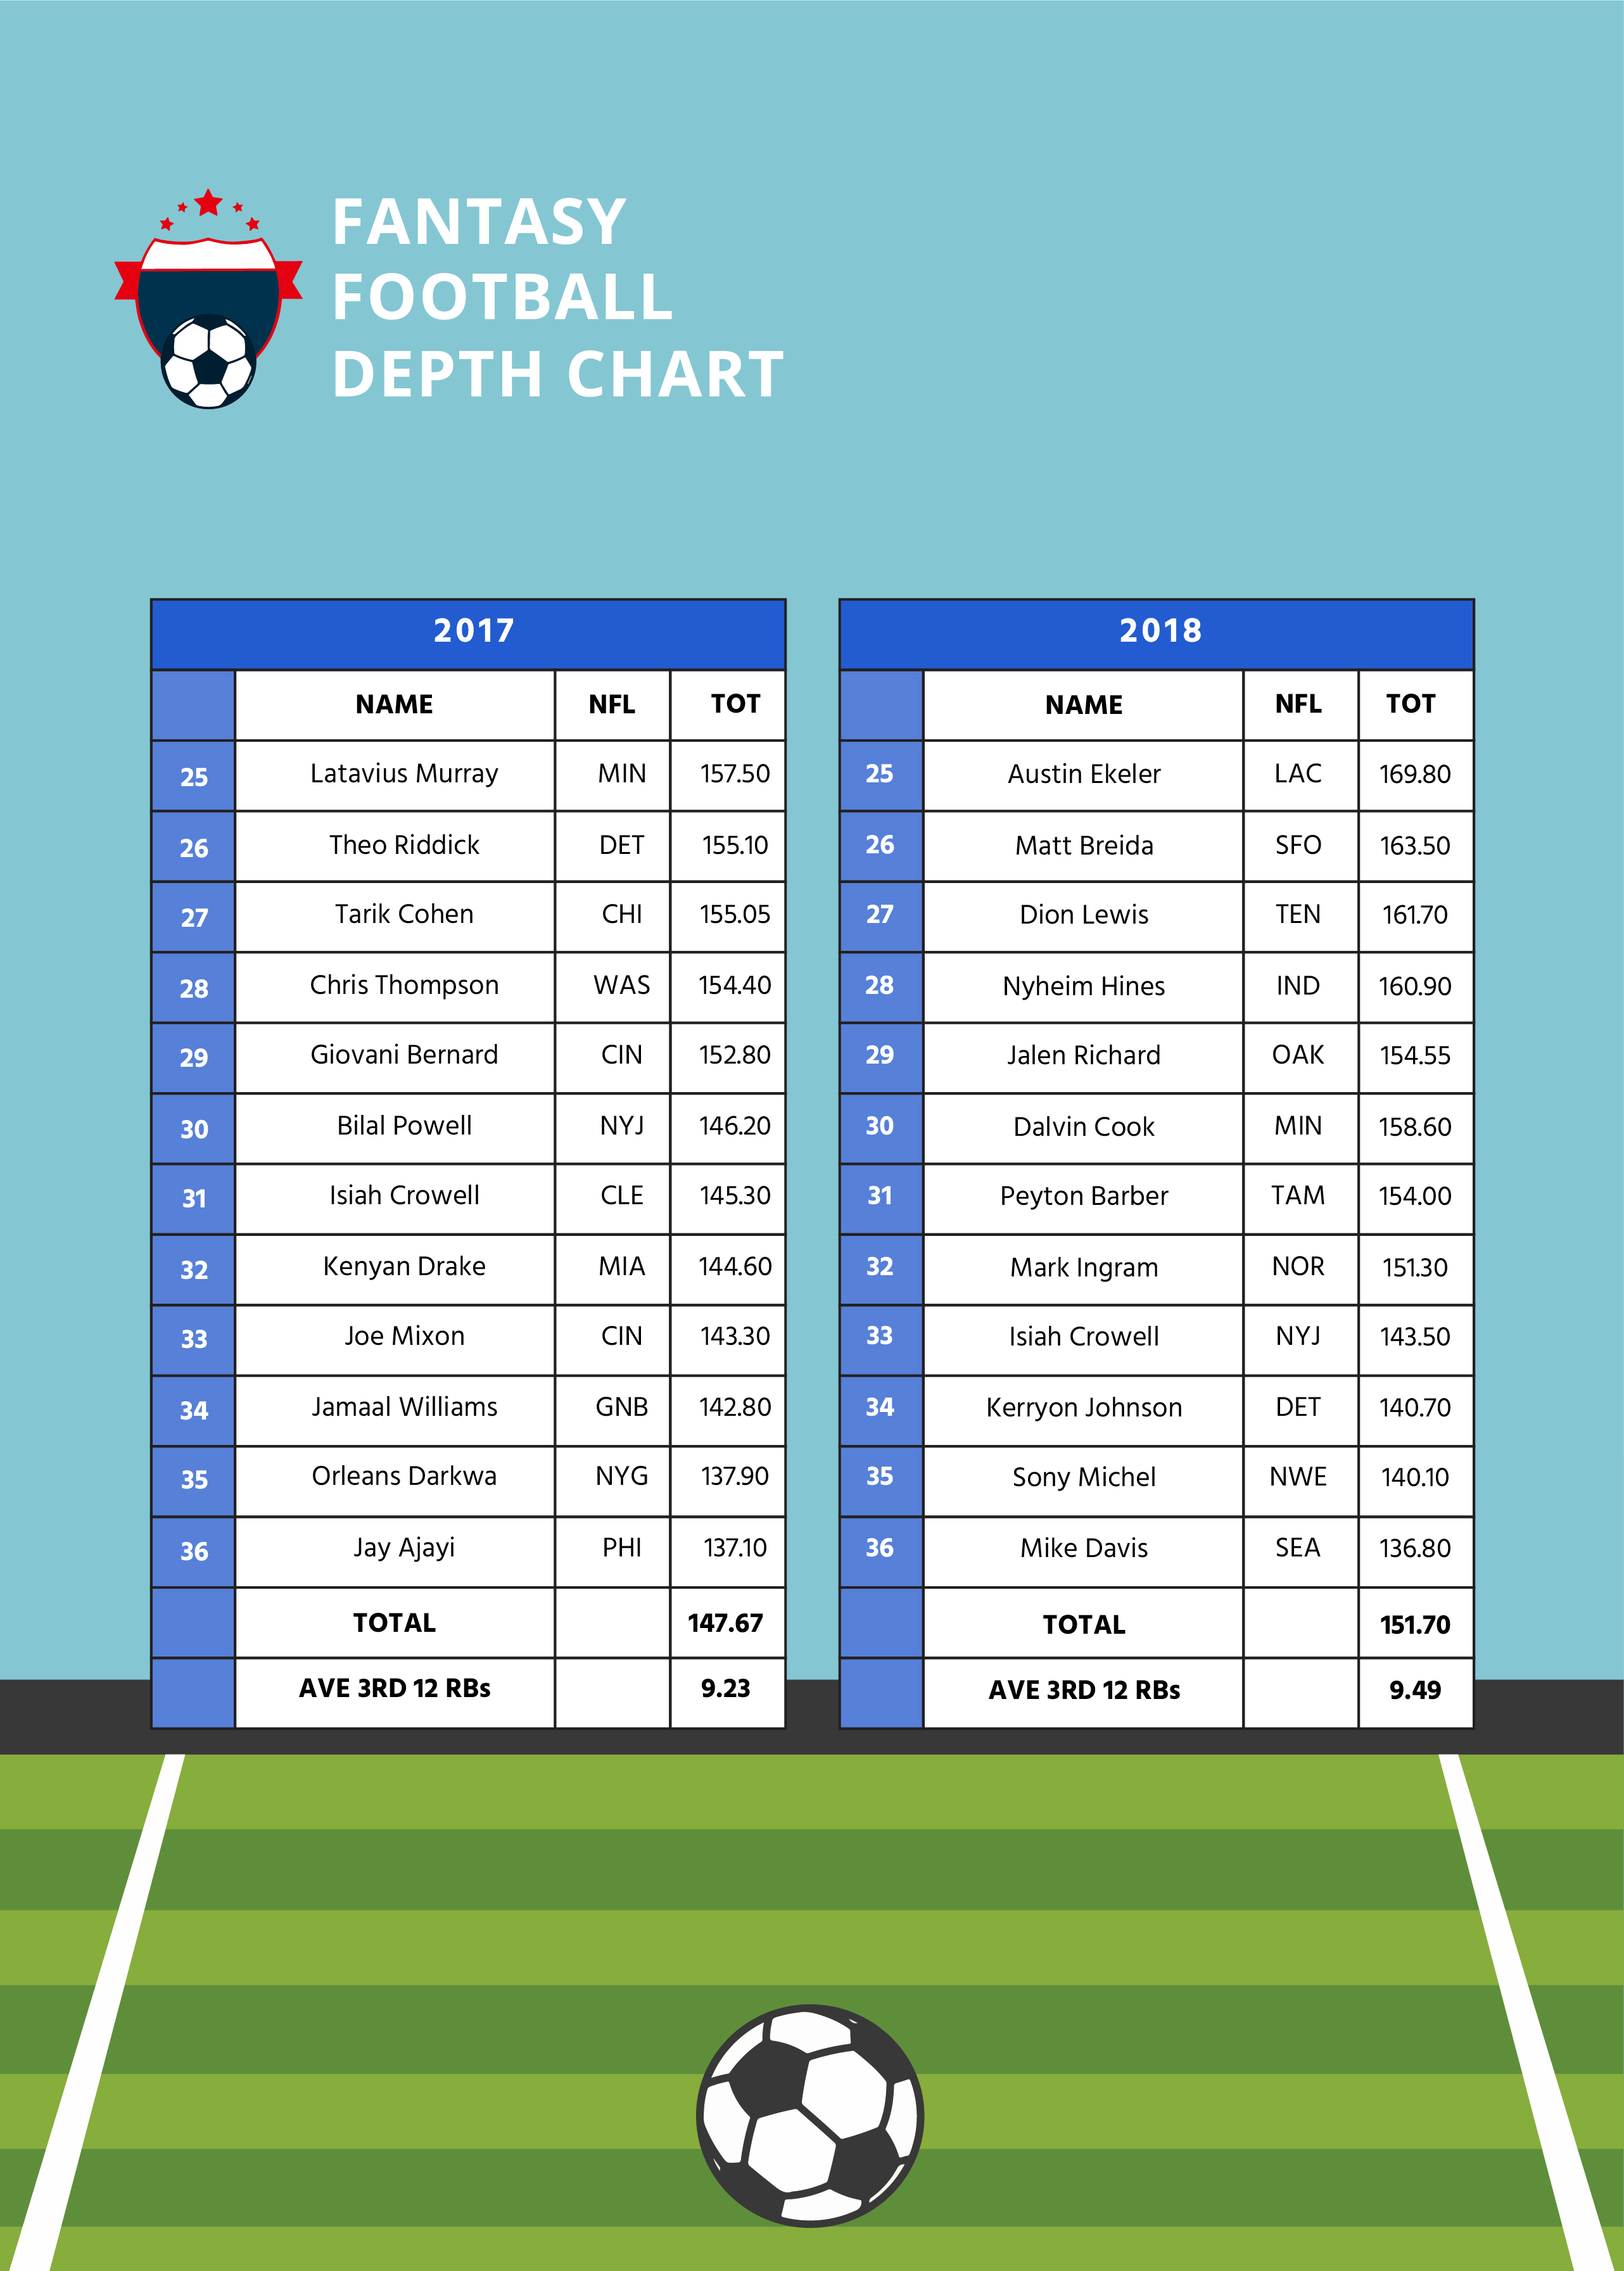 FREE Football Depth Chart Template Download in PDF, Illustrator